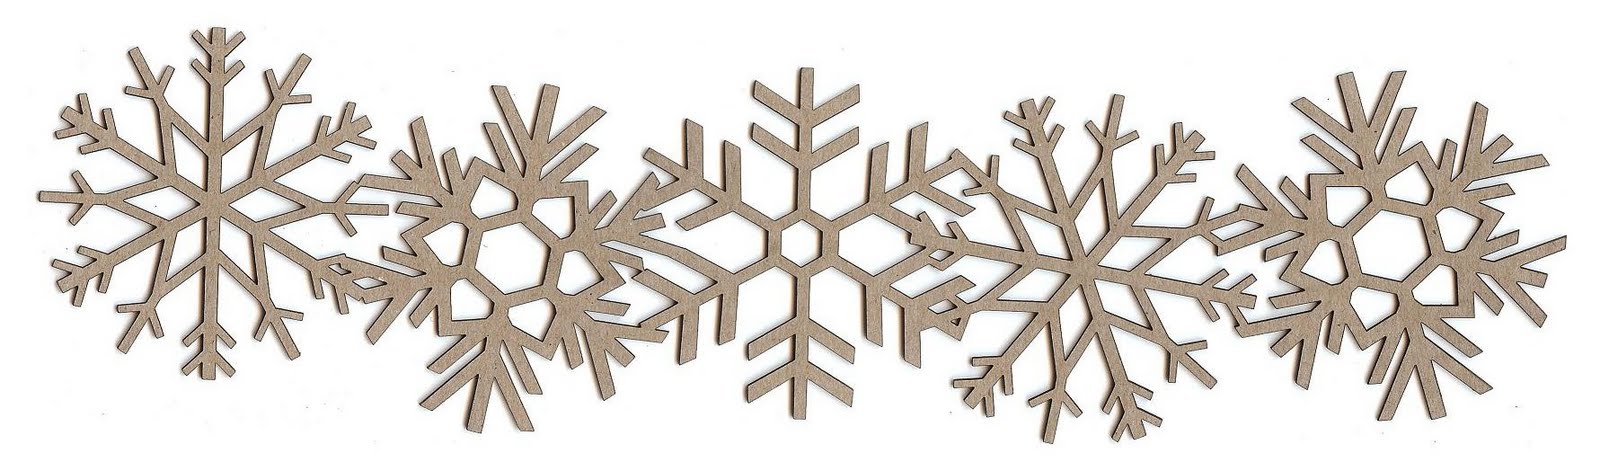 free clipart snowflakes borders - photo #46